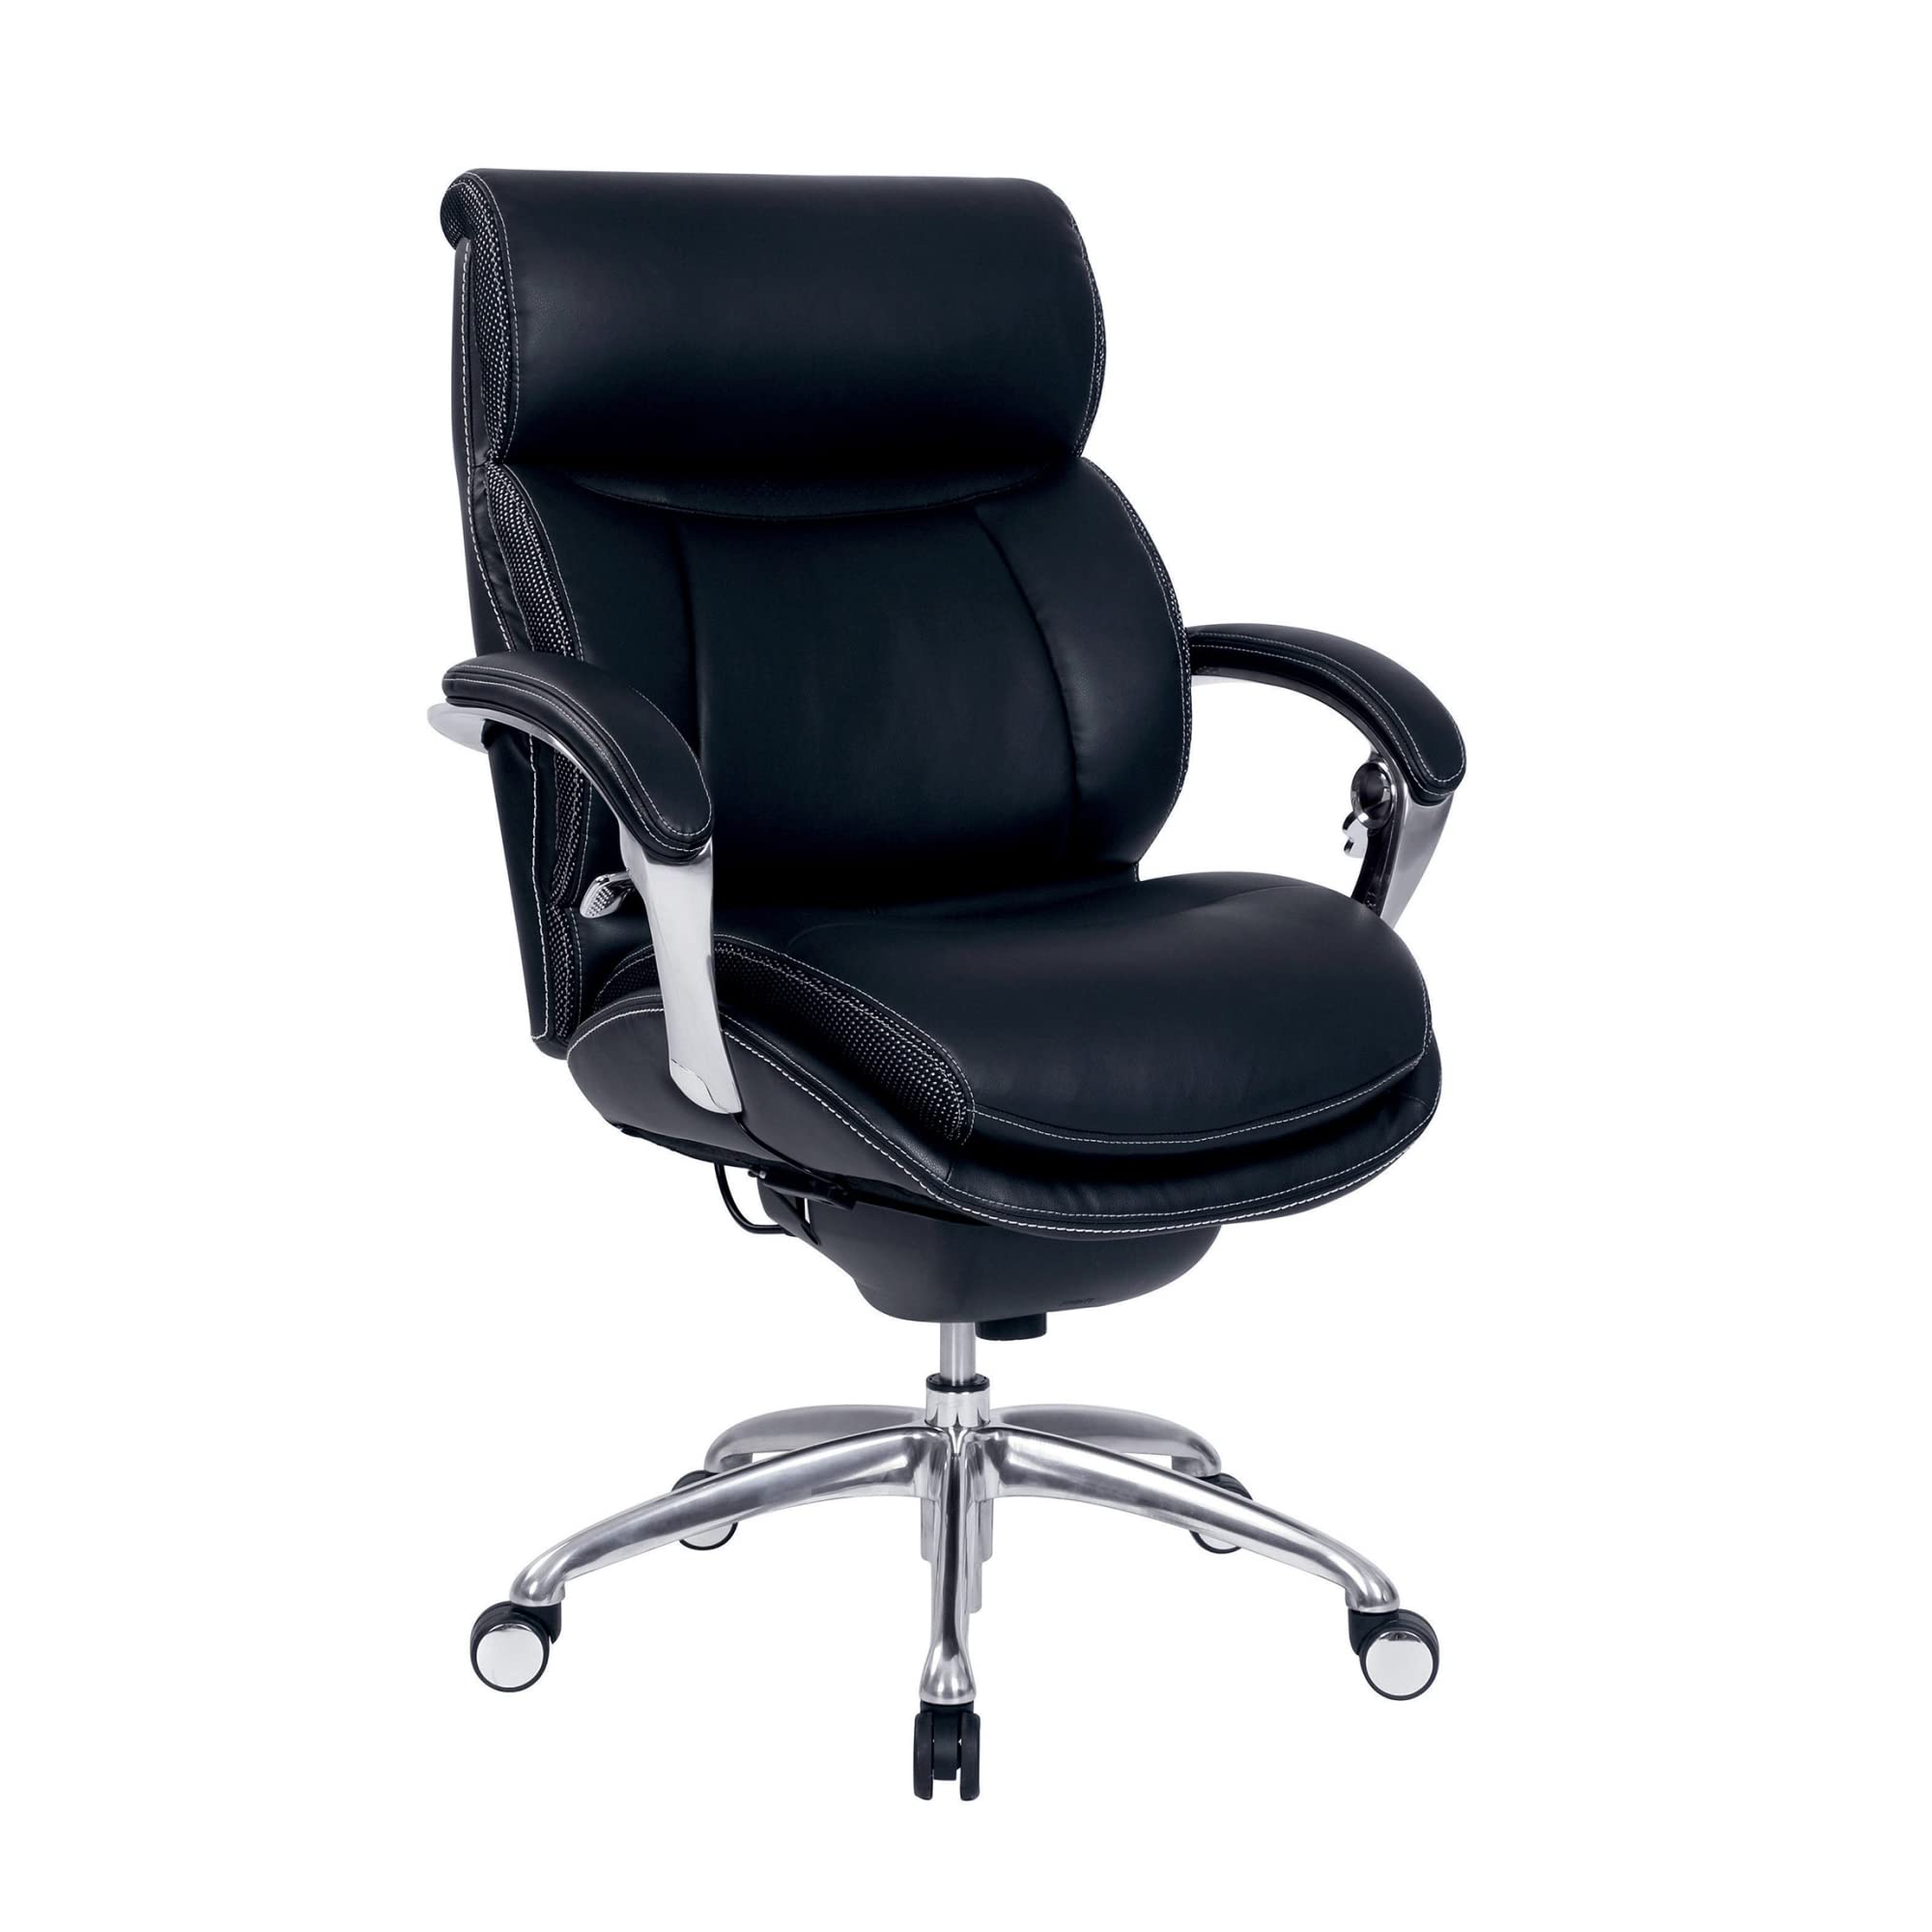 SertaA icomfort i5000 Ergonomic Bonded Leather Mid-Back Managers chair, Onyx BlackSilver